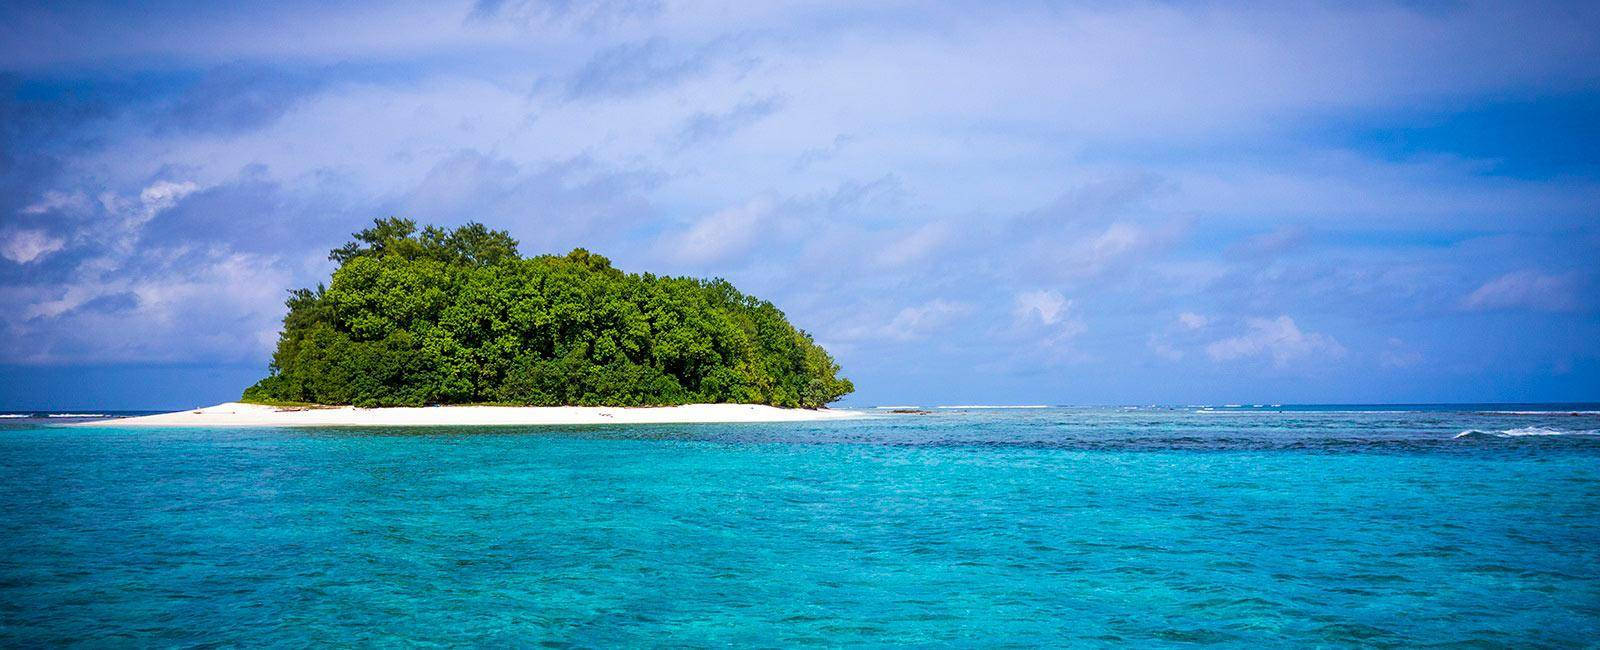 Stunning Solomon Islands View Wallpaper